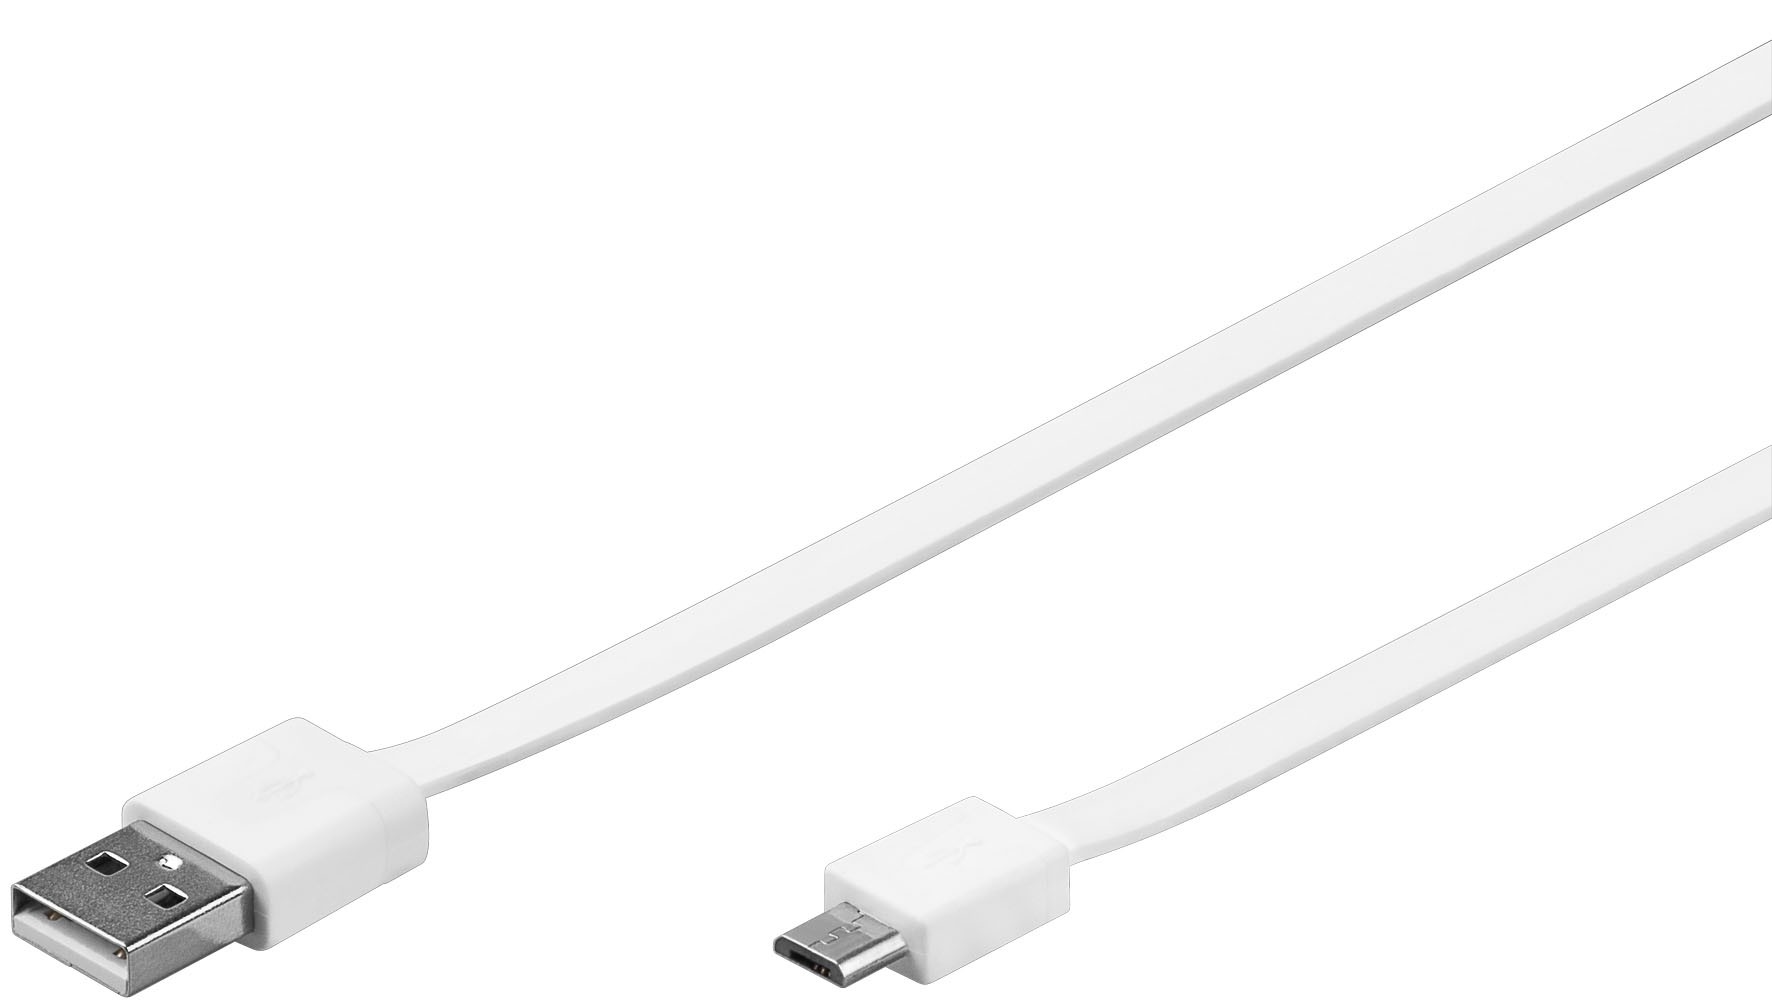 Goobay USB- Micro USB flat cable 1 meter